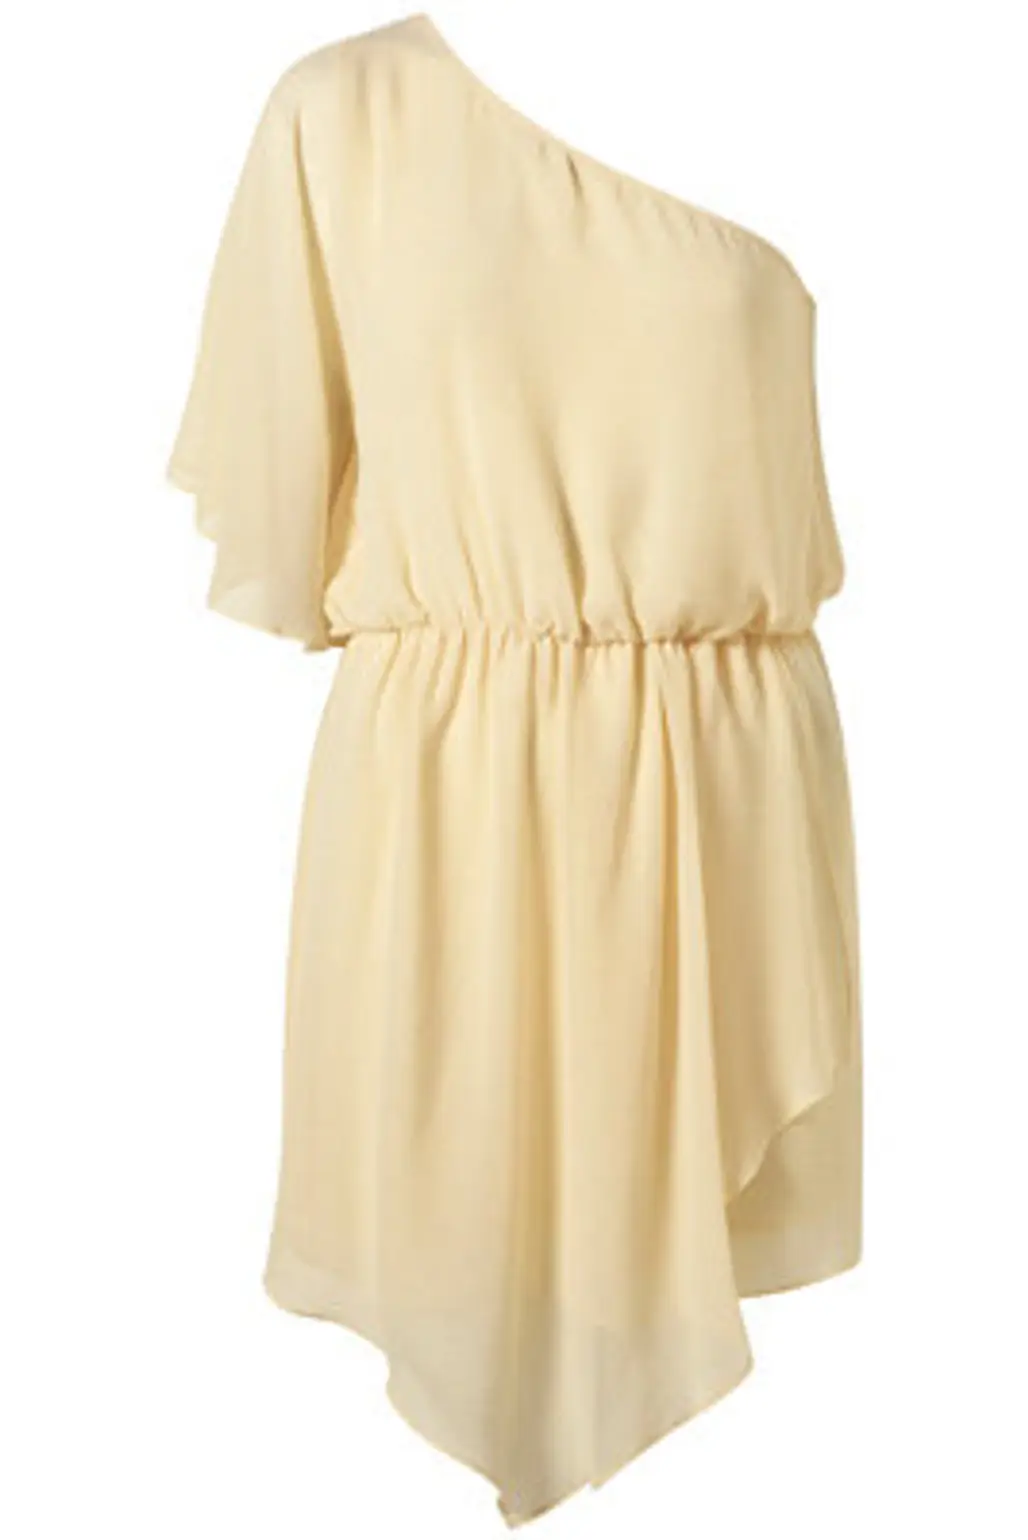 Topshop Lemon One Shoulder Grecian Chiffon Dress